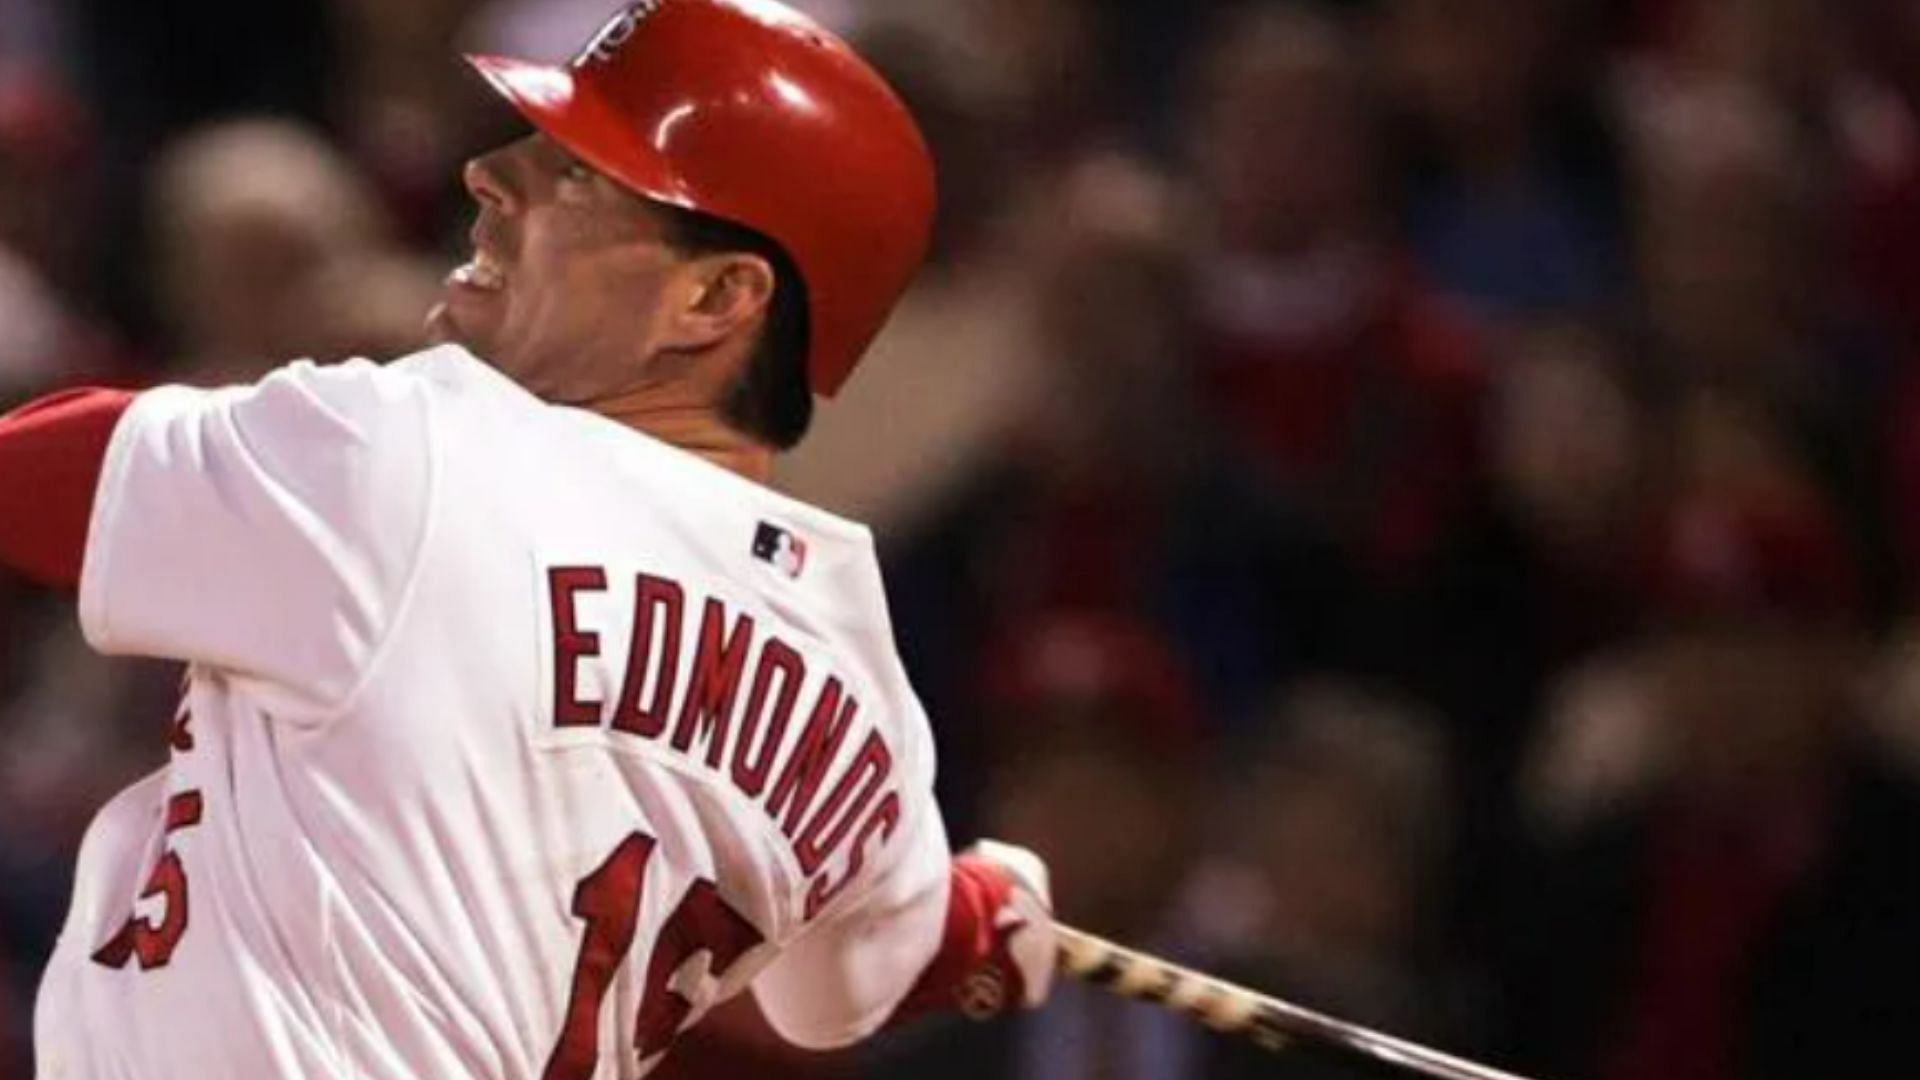 Jim Edmonds calls it a career, retires